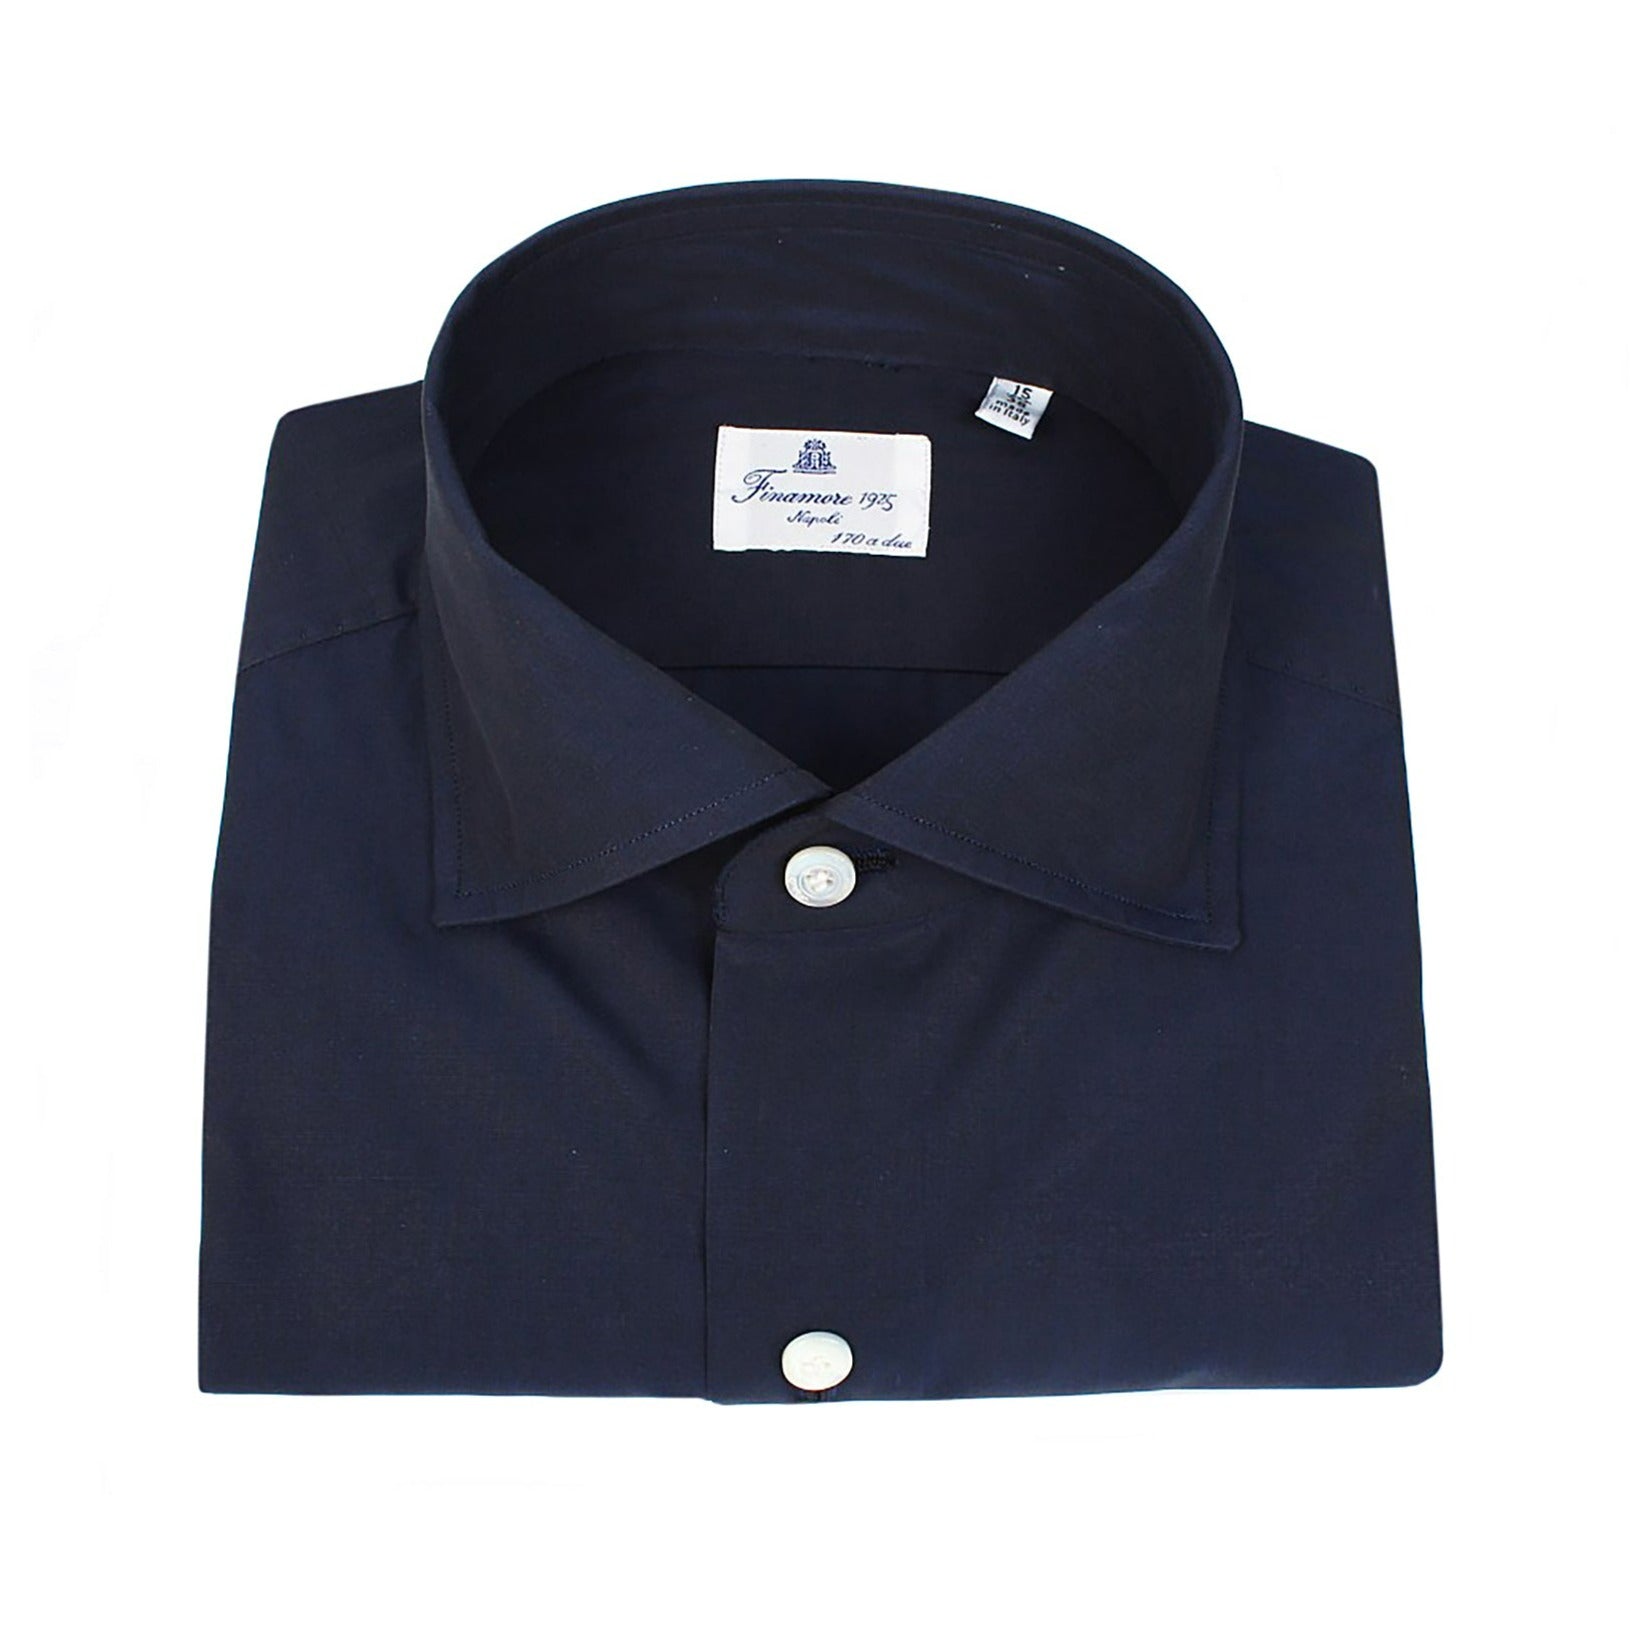 Dress shirt Napoli 170 a due dark blue fabric Finamore 1925